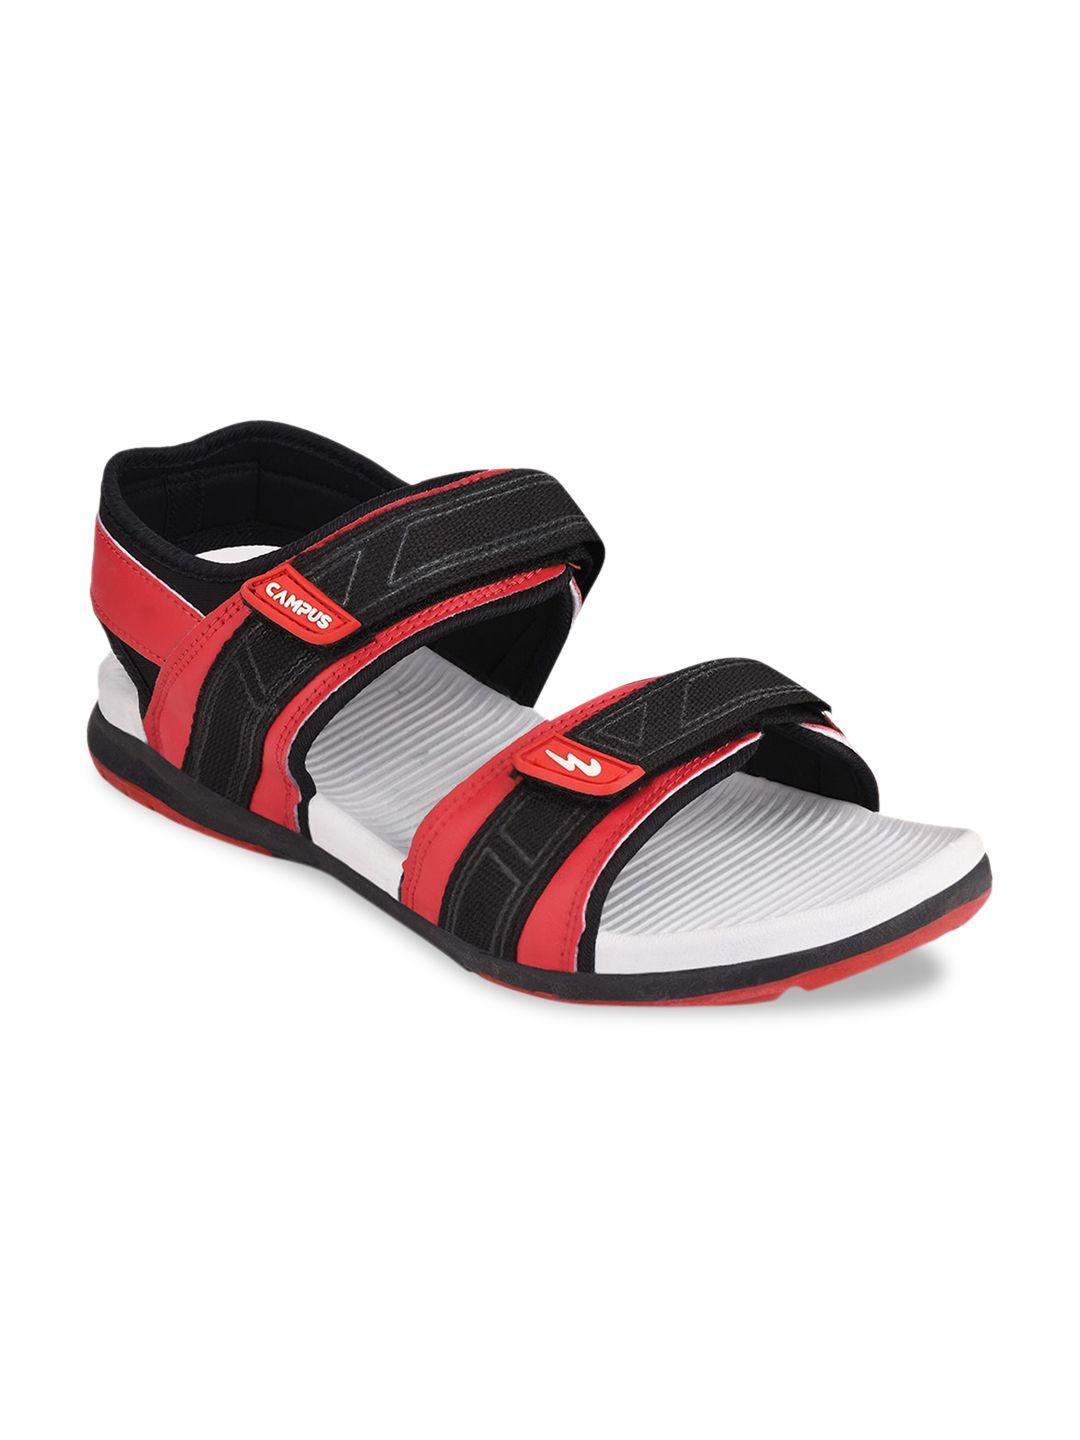 campus-men-red-&-black-sports-sandals